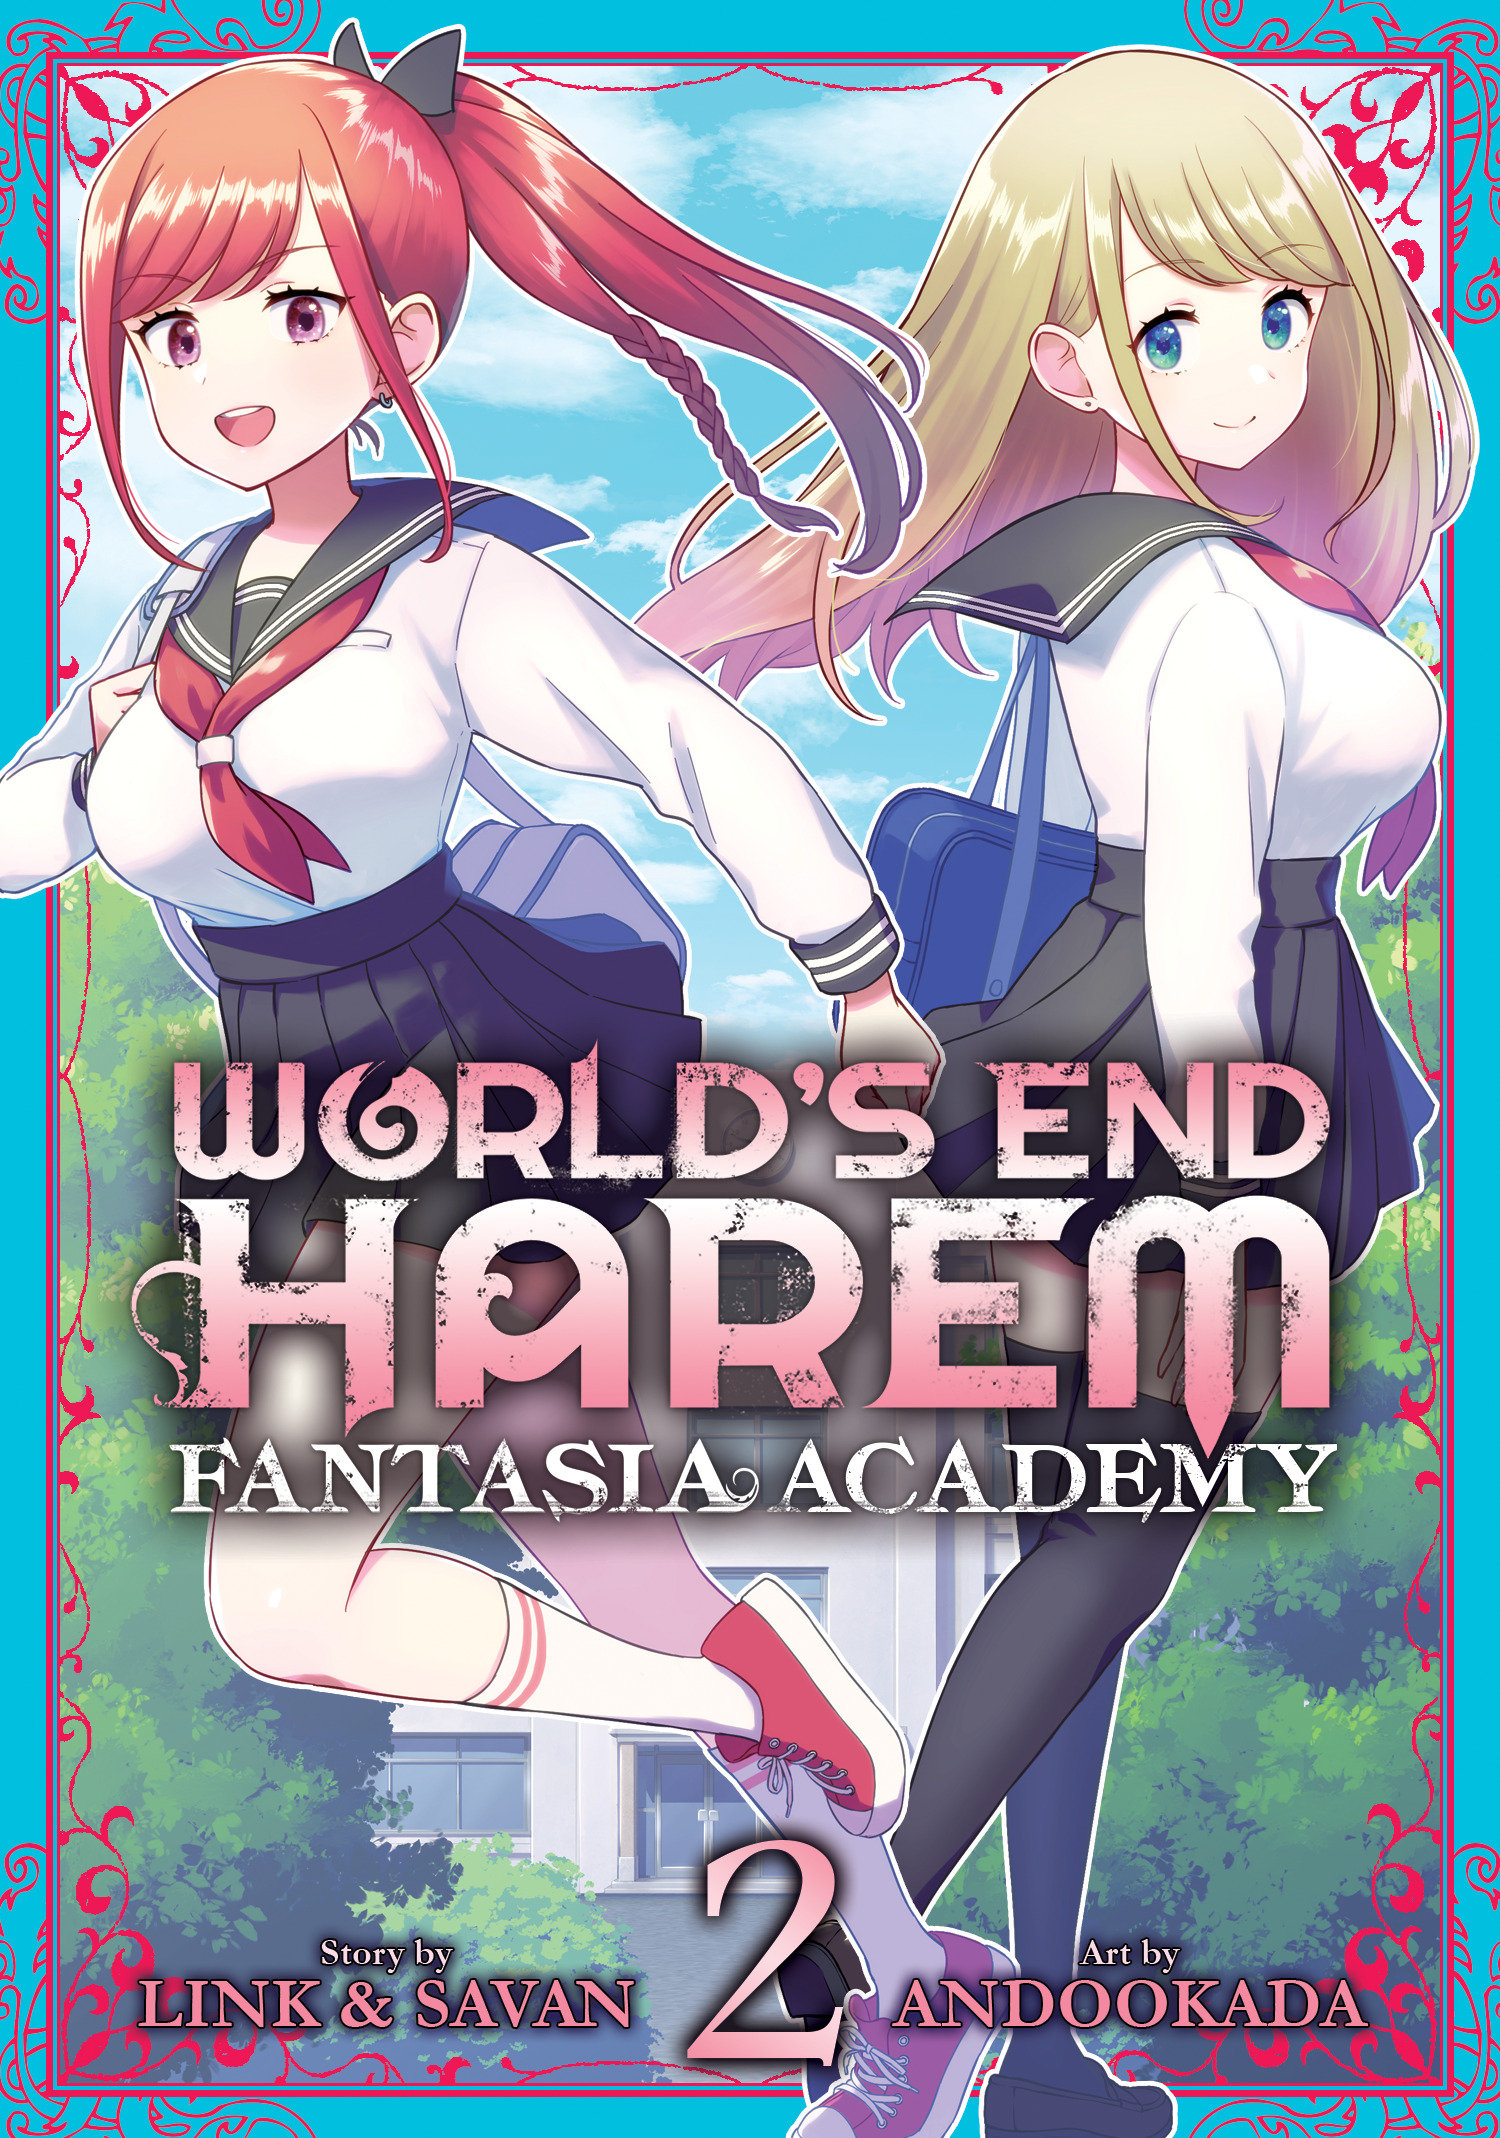 World's End Harem Fantasia Academy Graphic Novel Volume 2 (Mature)